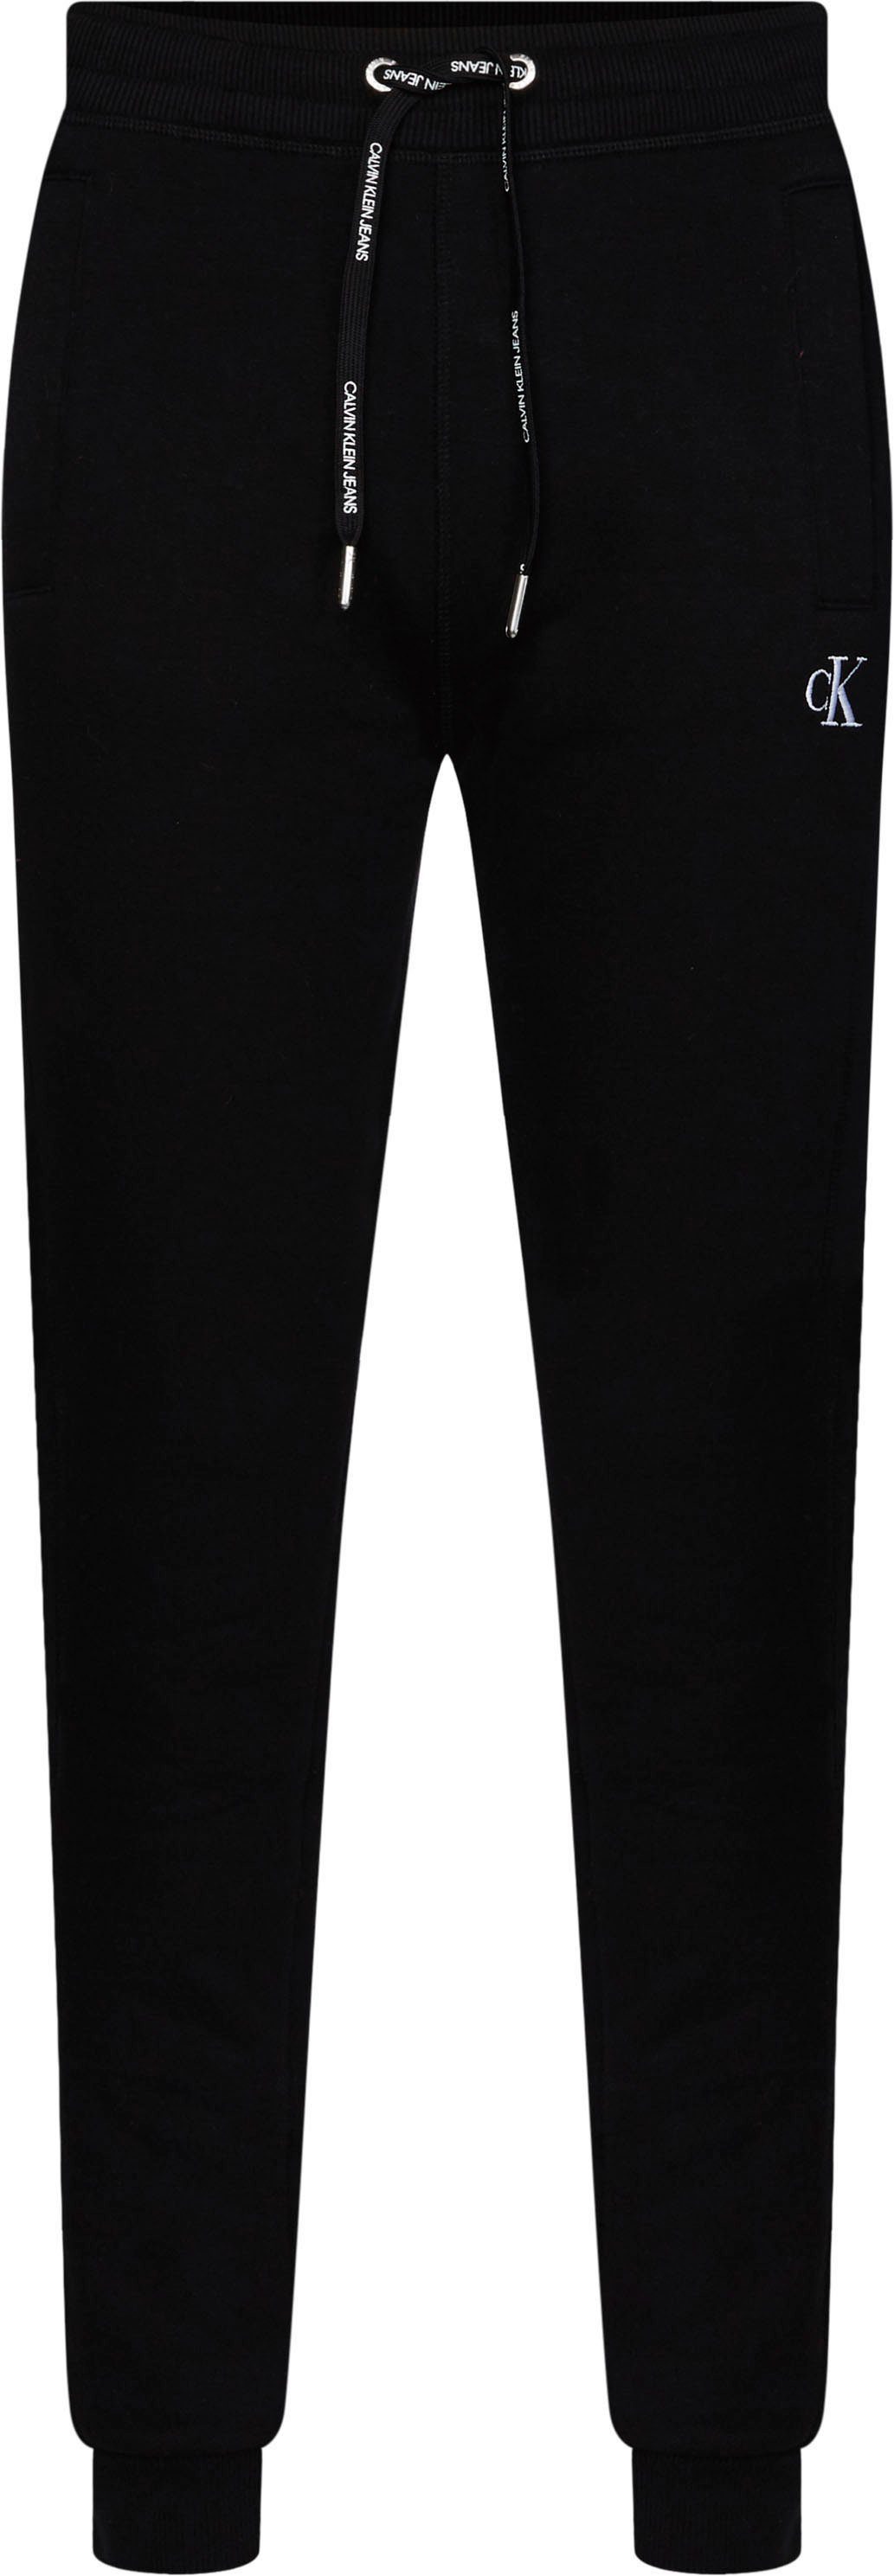 Calvin Klein Jeans Jogginghose »CK EMBROIDERY JOGG PANTS« mit Calvin Klein  Monogramm Stickerei online kaufen | OTTO